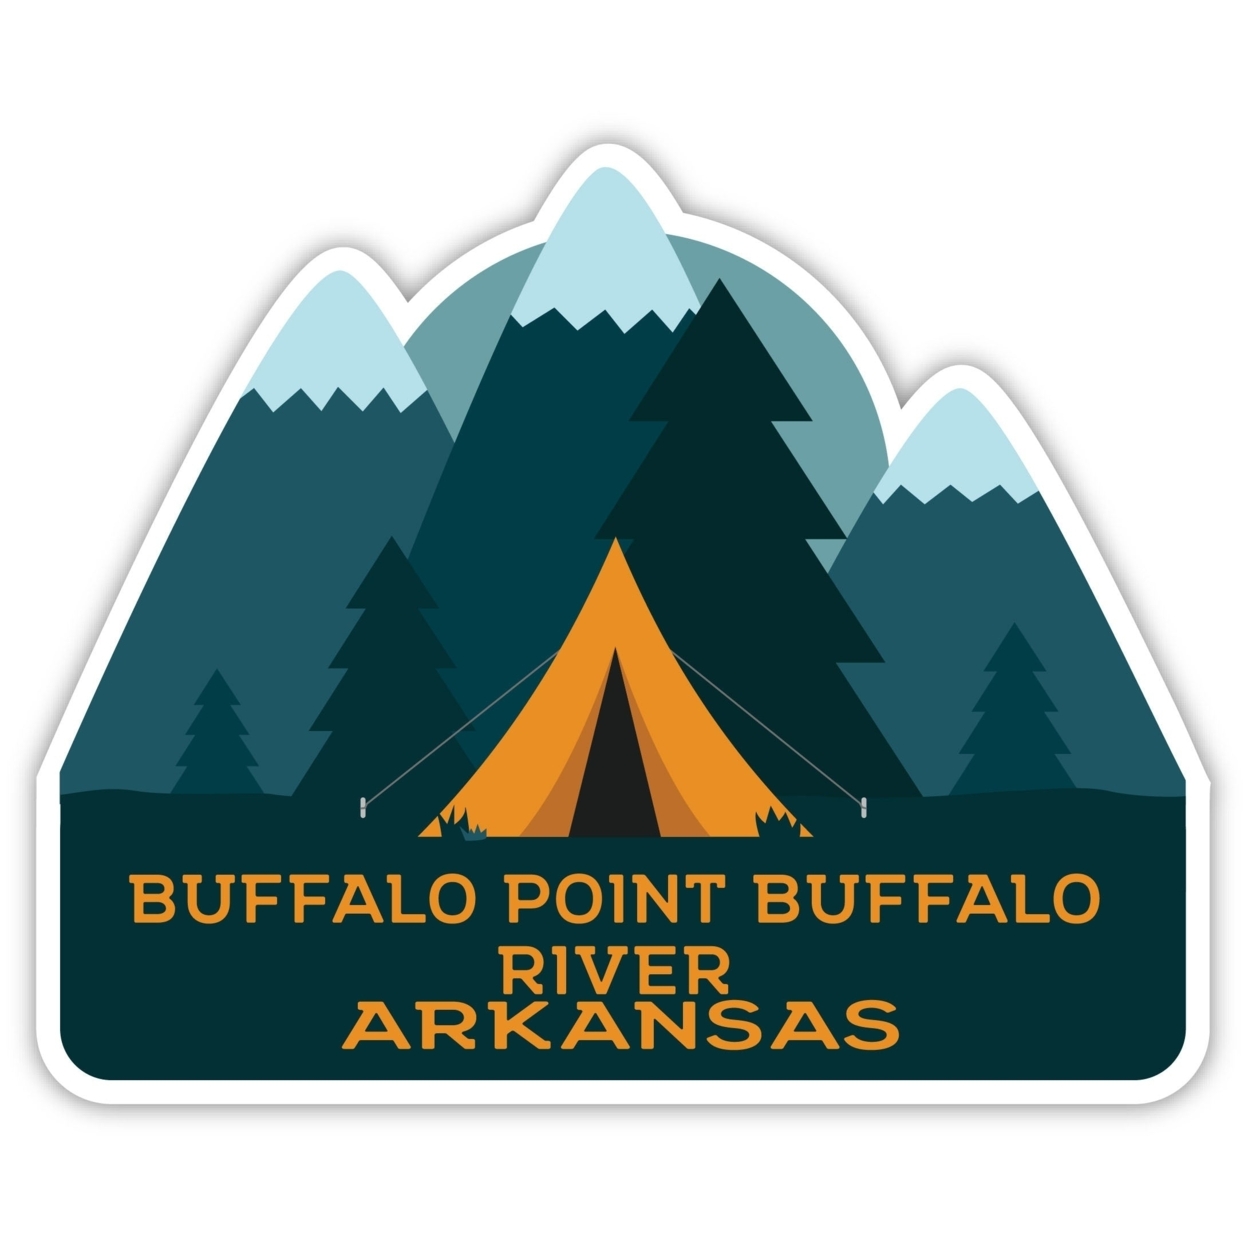 Buffalo Point Buffalo River Arkansas Souvenir Decorative Stickers (Choose Theme And Size) - Single Unit, 10-Inch, Camp Life